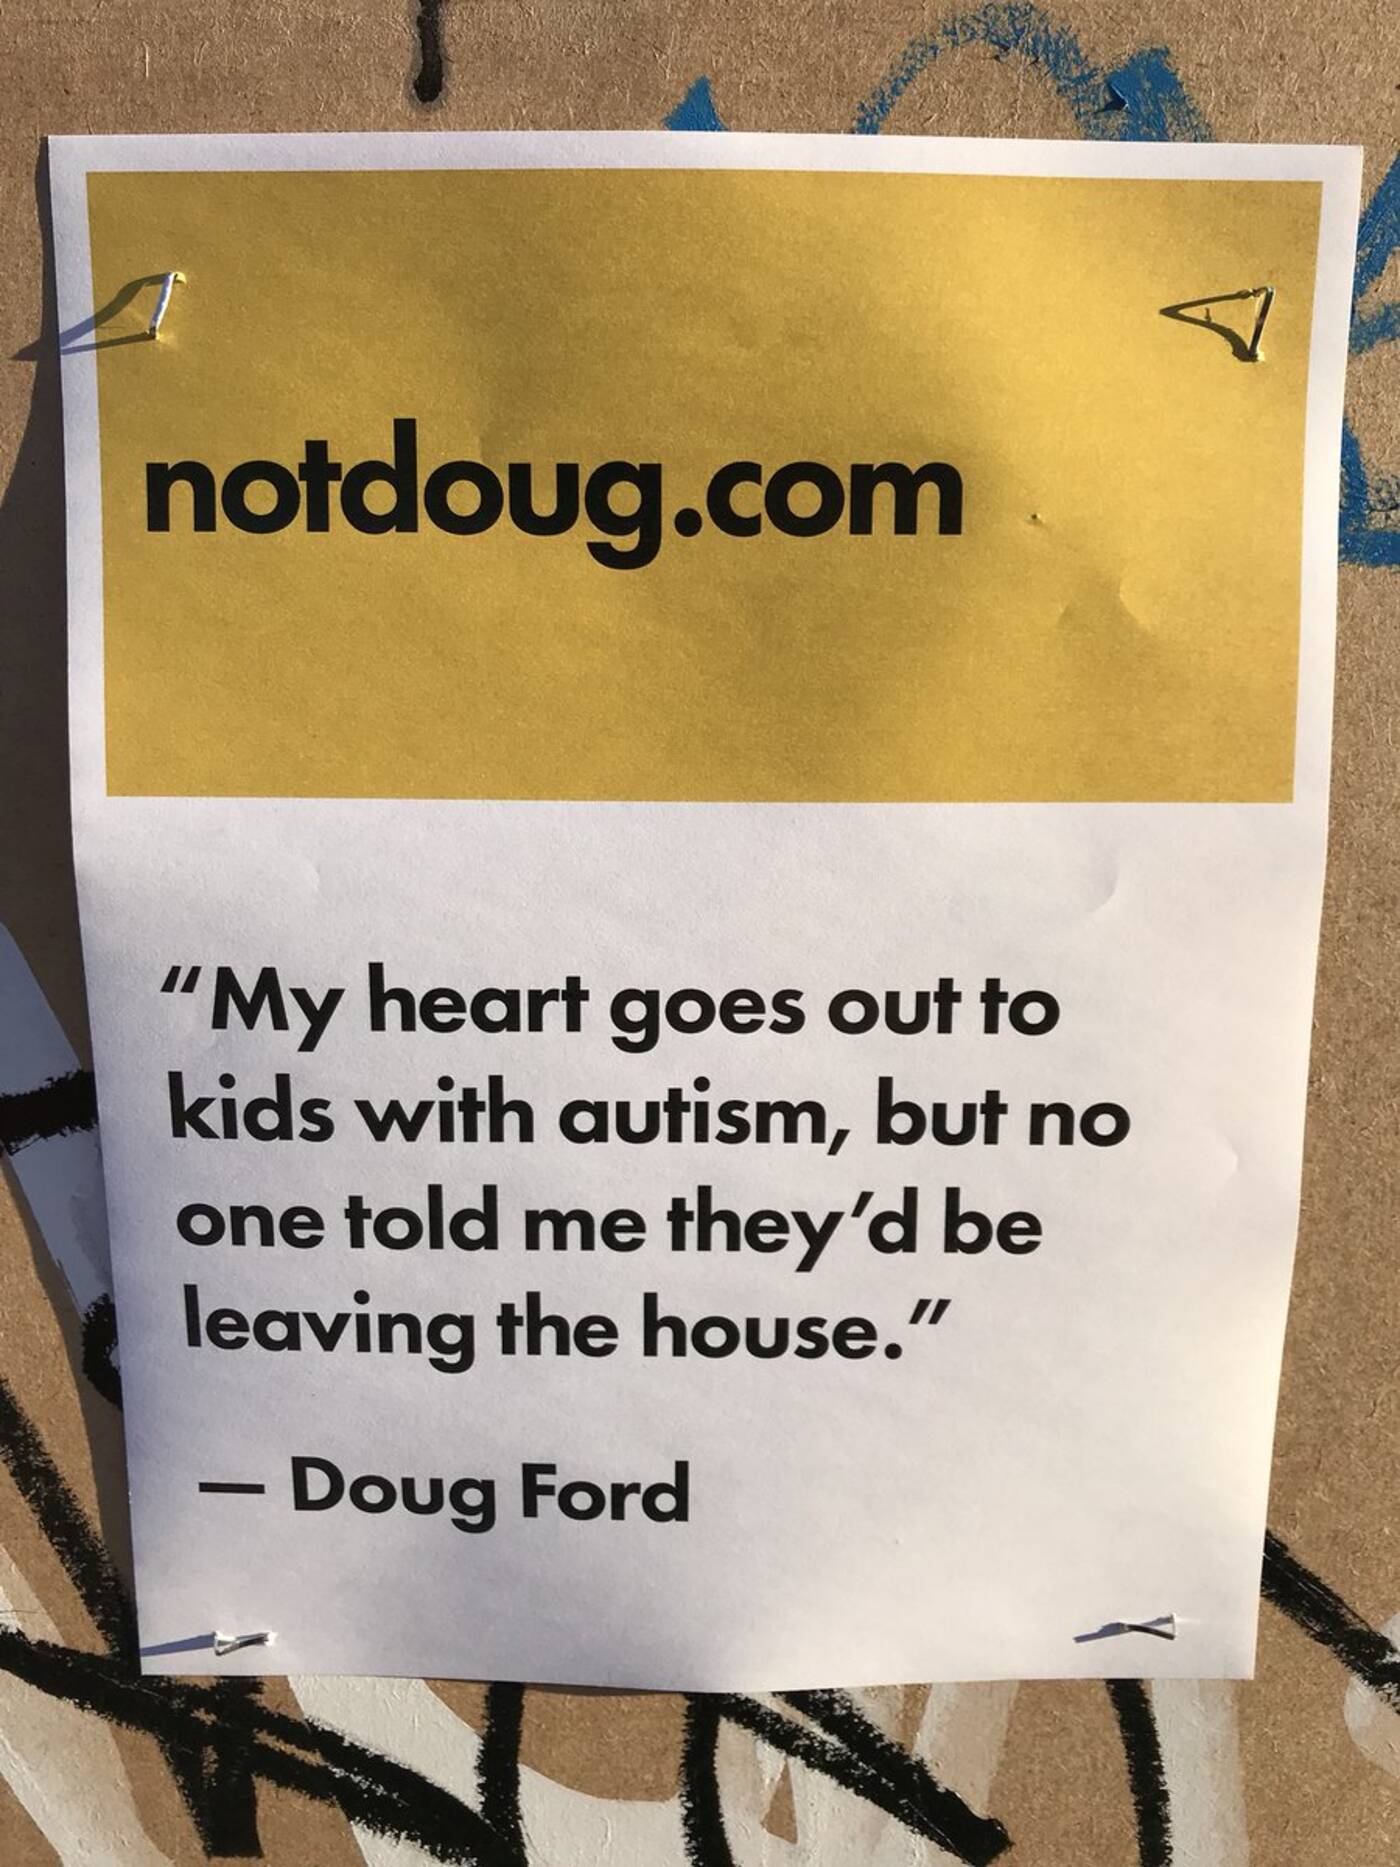 NotDoug campaign